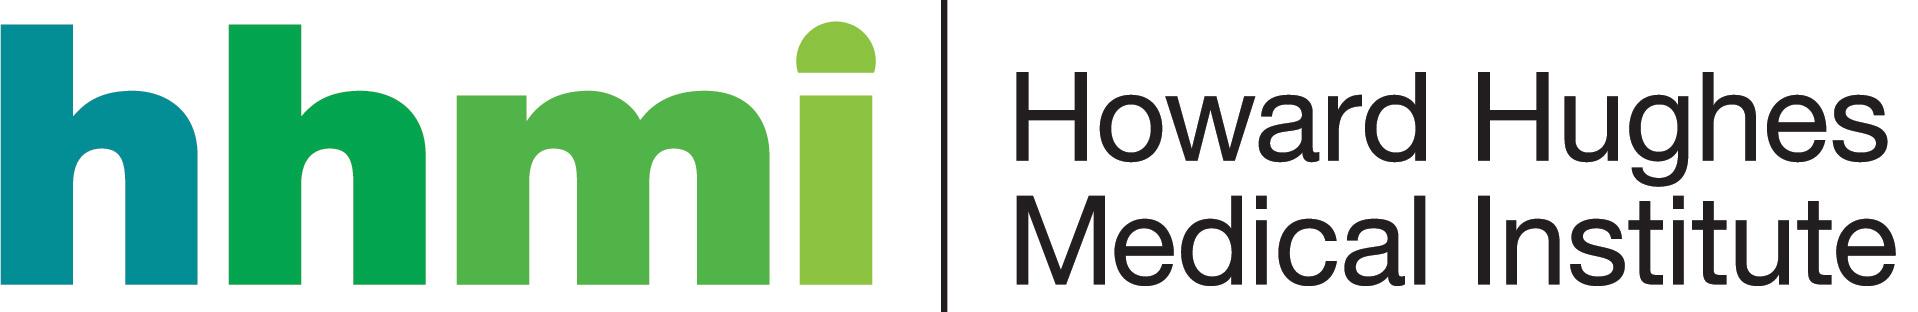 HHMIhorizontal logo